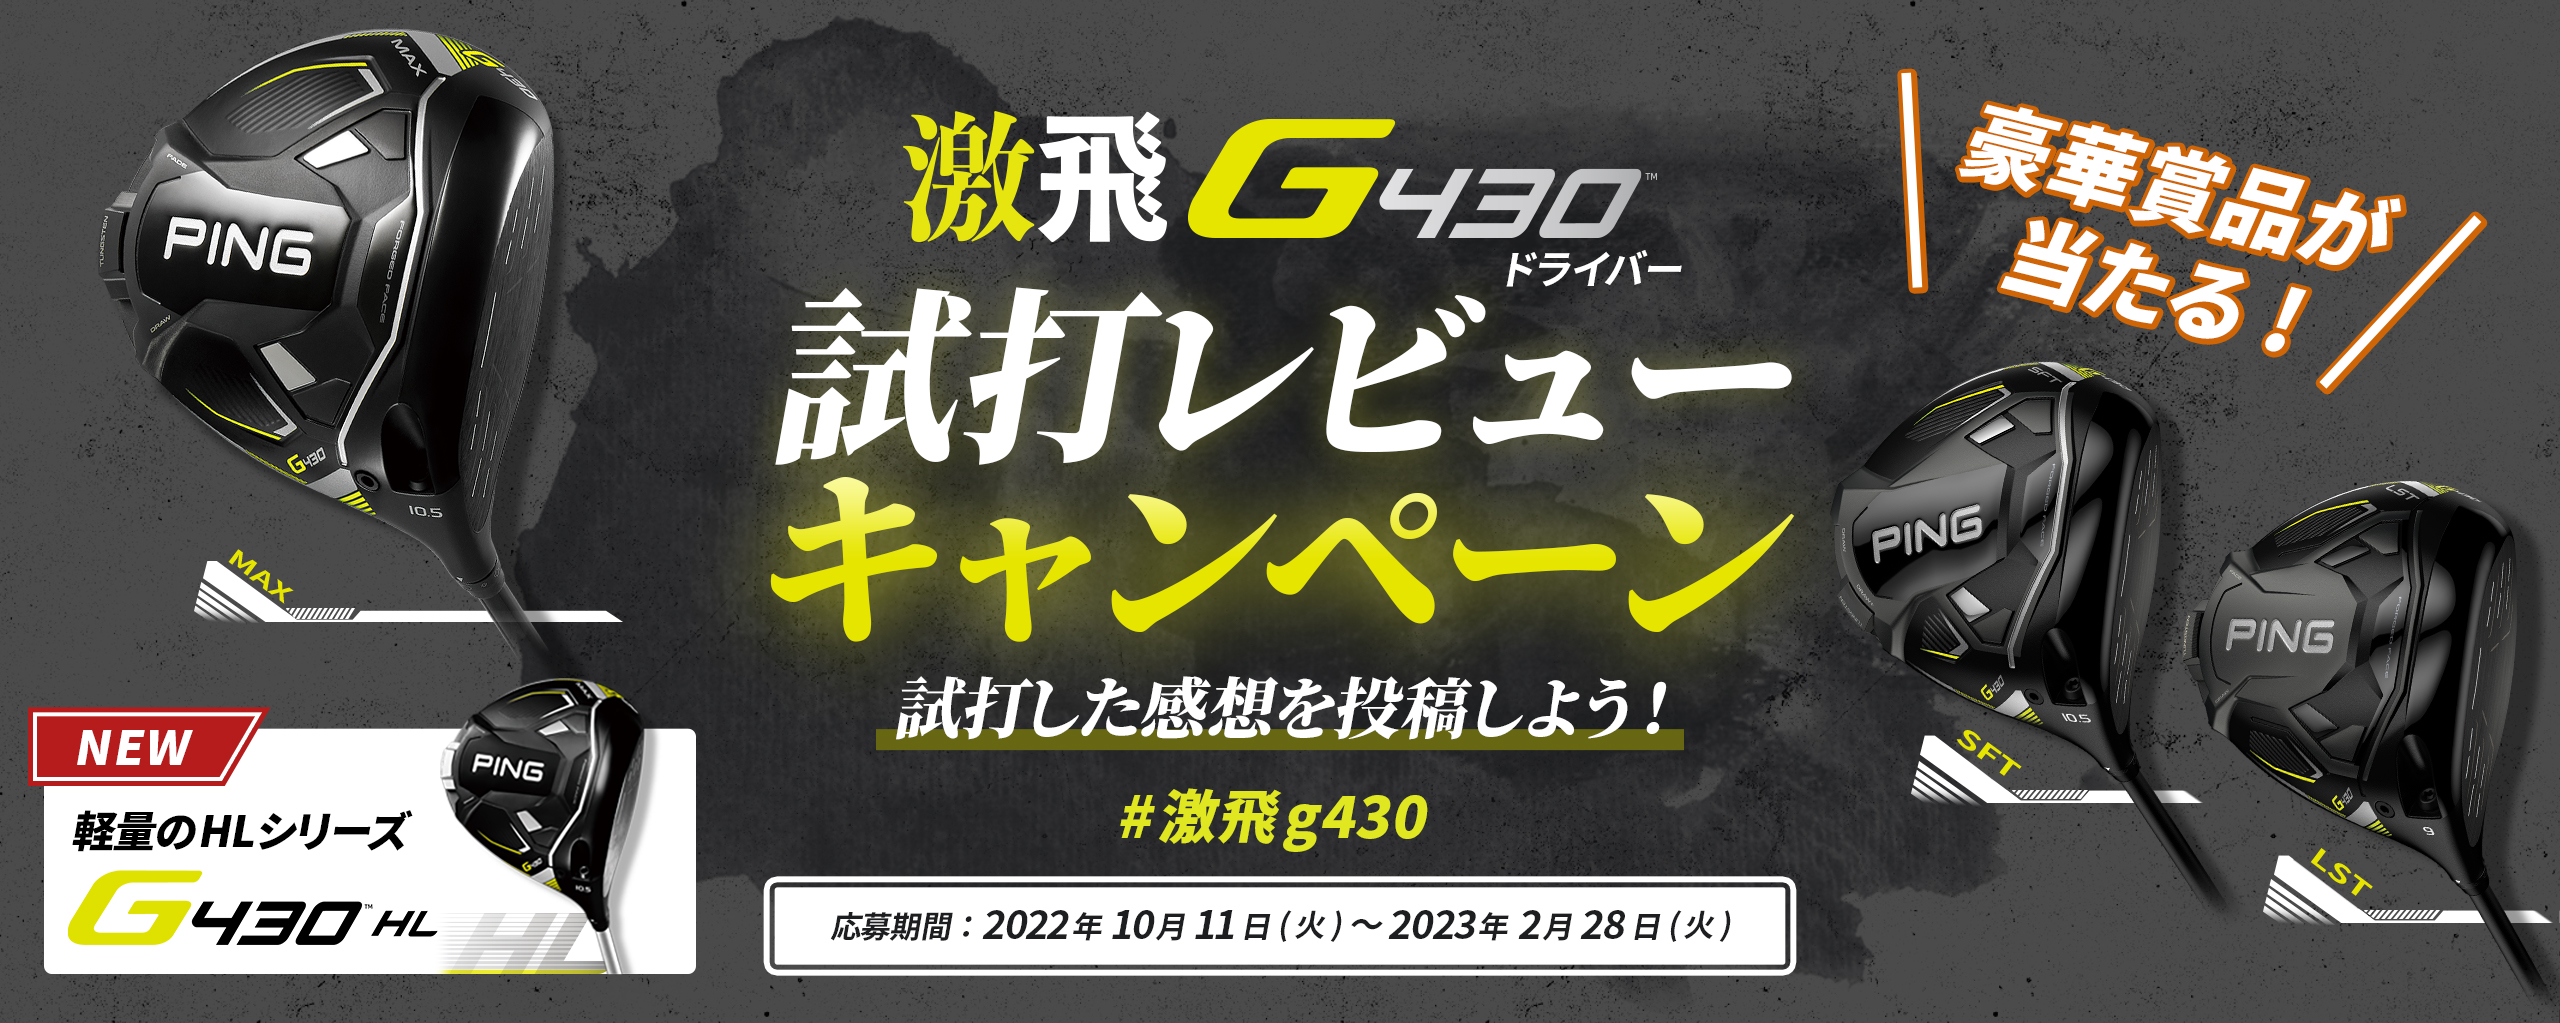 G430ドライバー試打キャンペーン